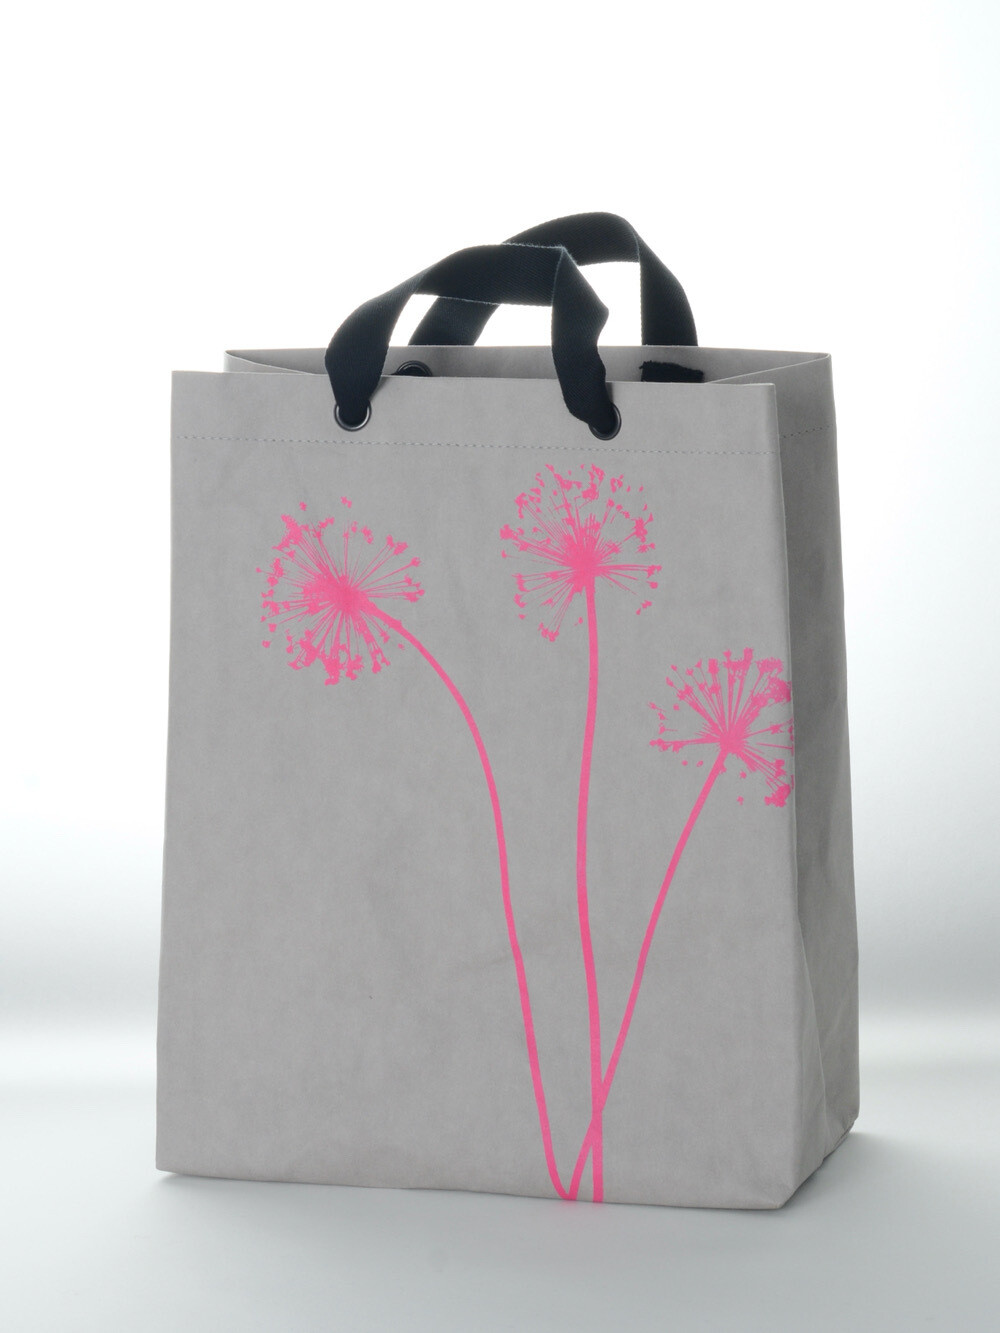 Shopper Allium grau mit pinkem Druck